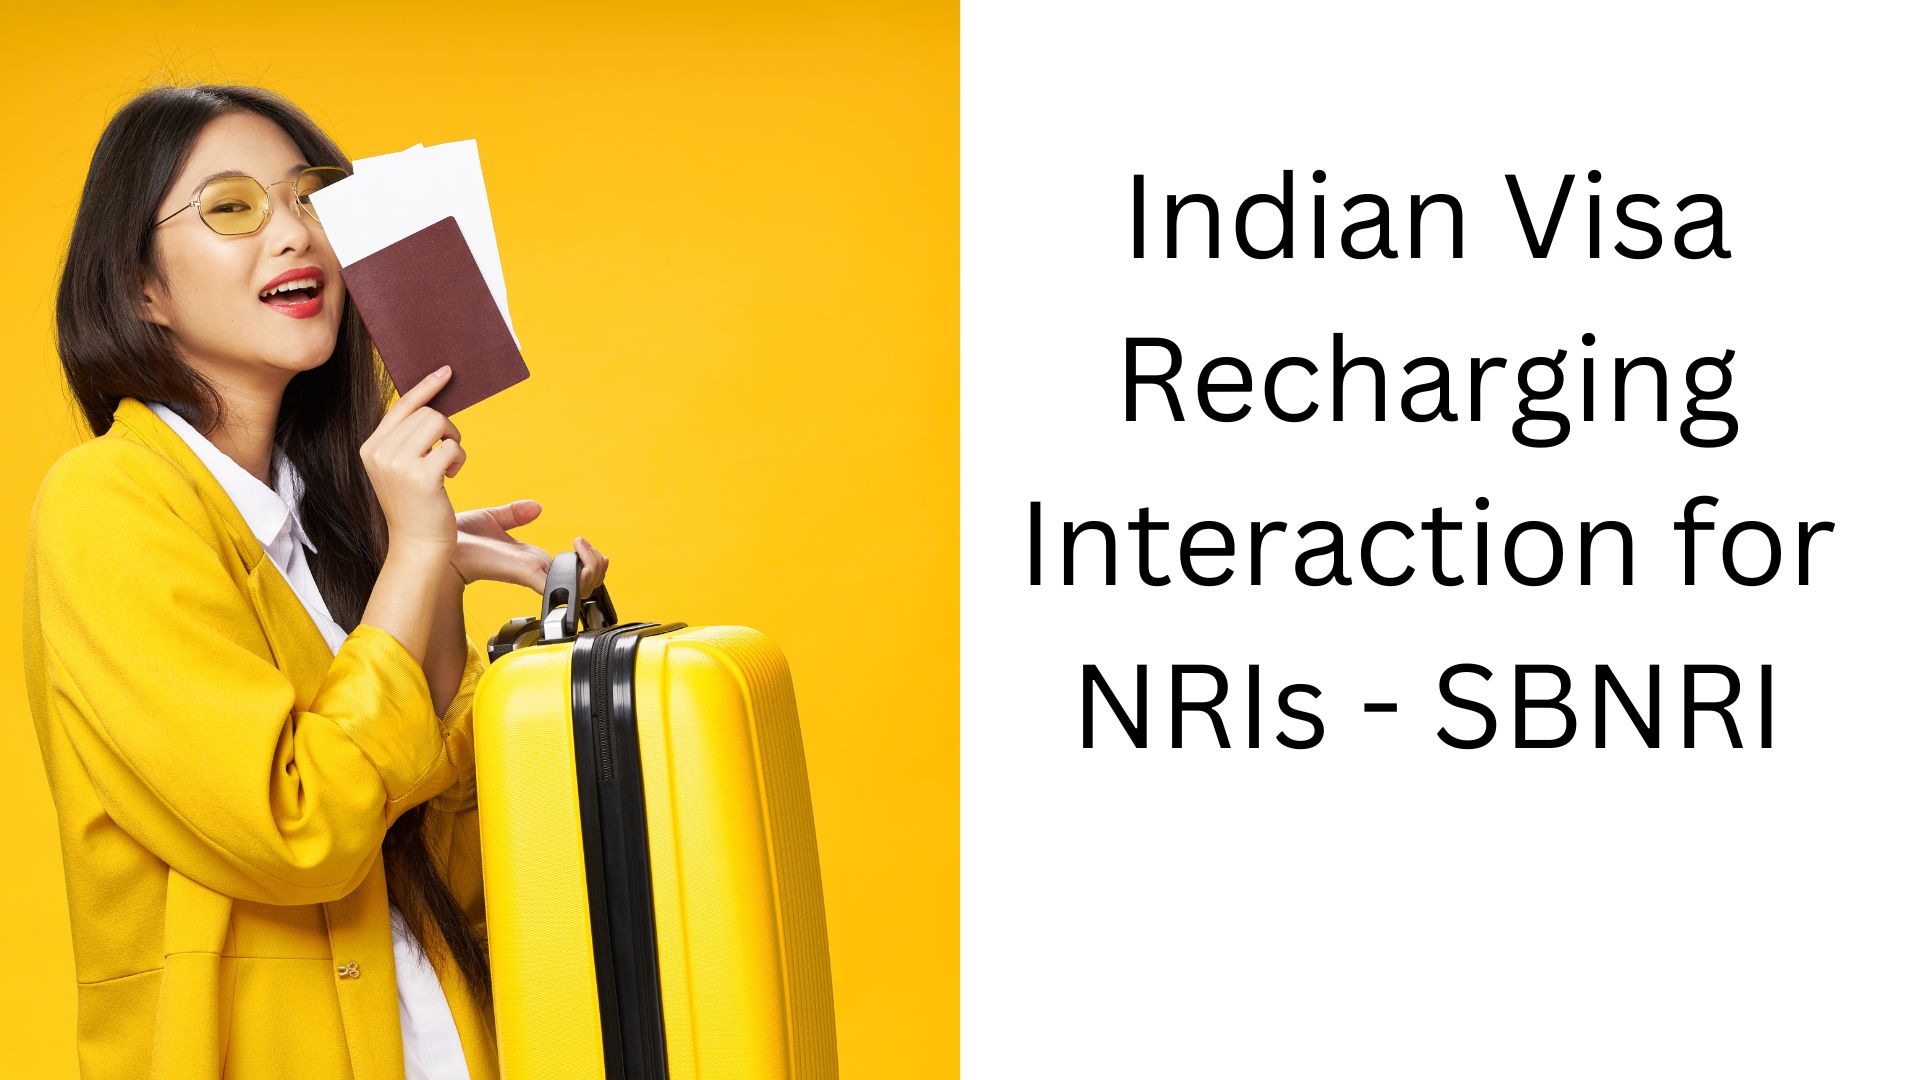 Indian Visa Recharging Interaction for NRIs - SBNRI